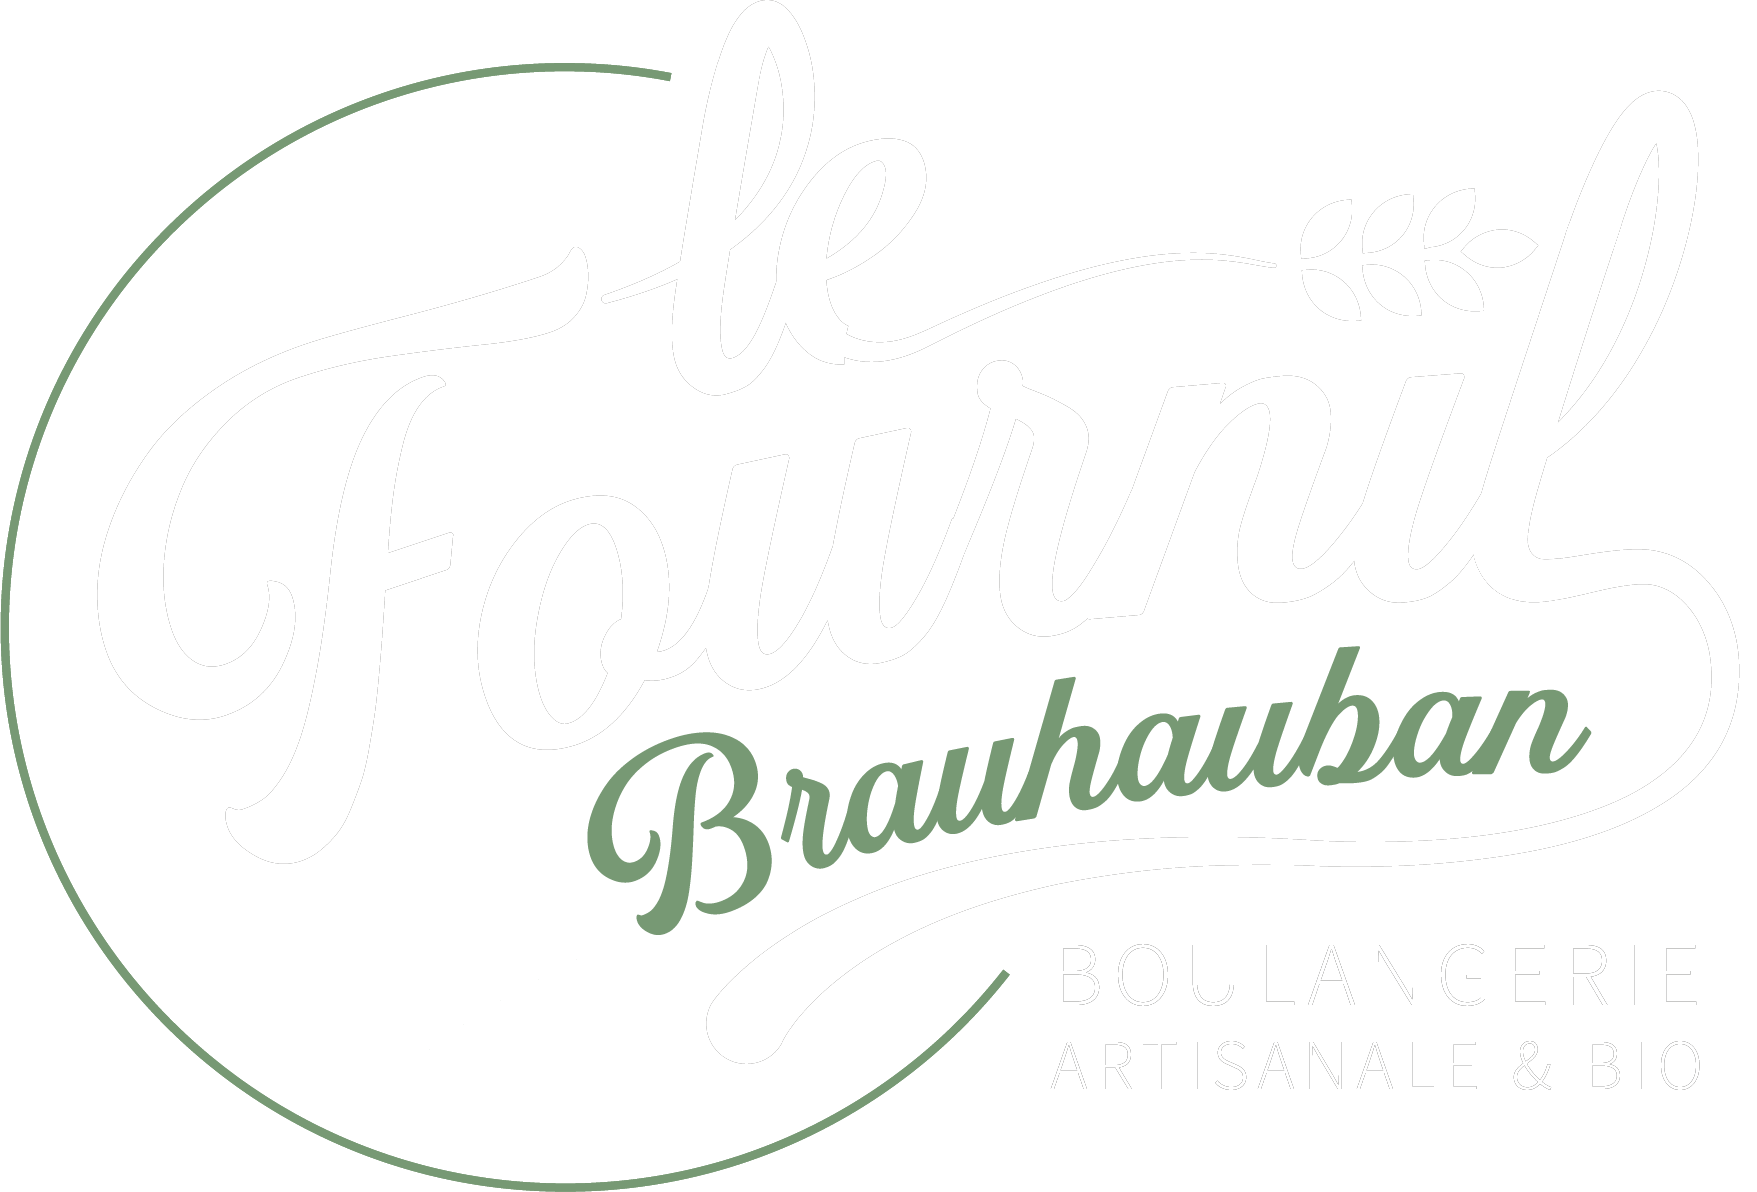 Logo Fournil Halle Brauhauban Tarbes